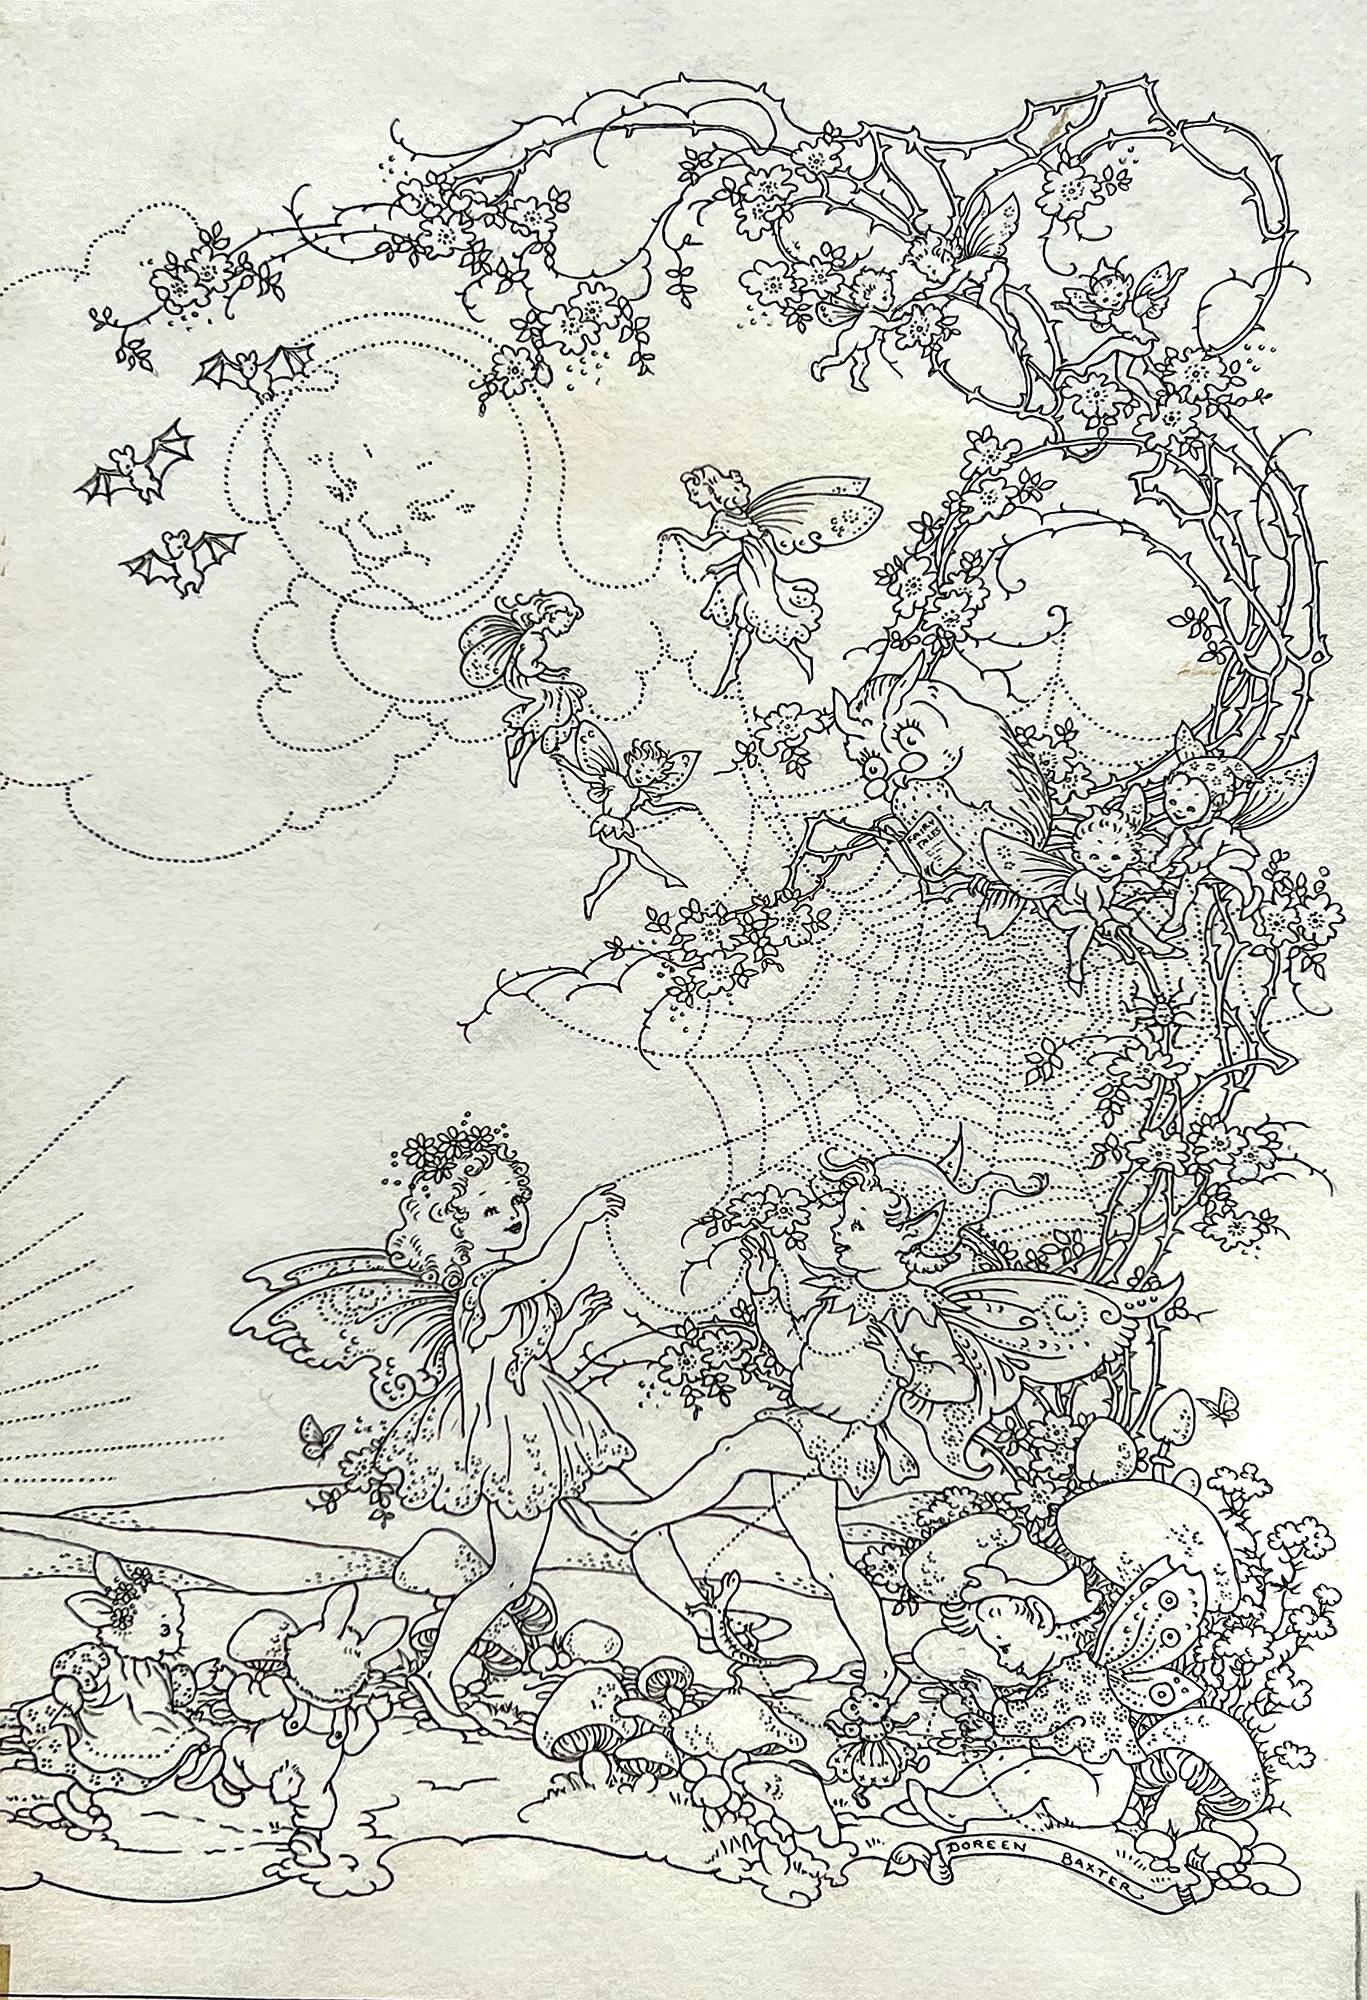 Märchen vom Wunderland  - Fairy Tale  -  Illustratorin